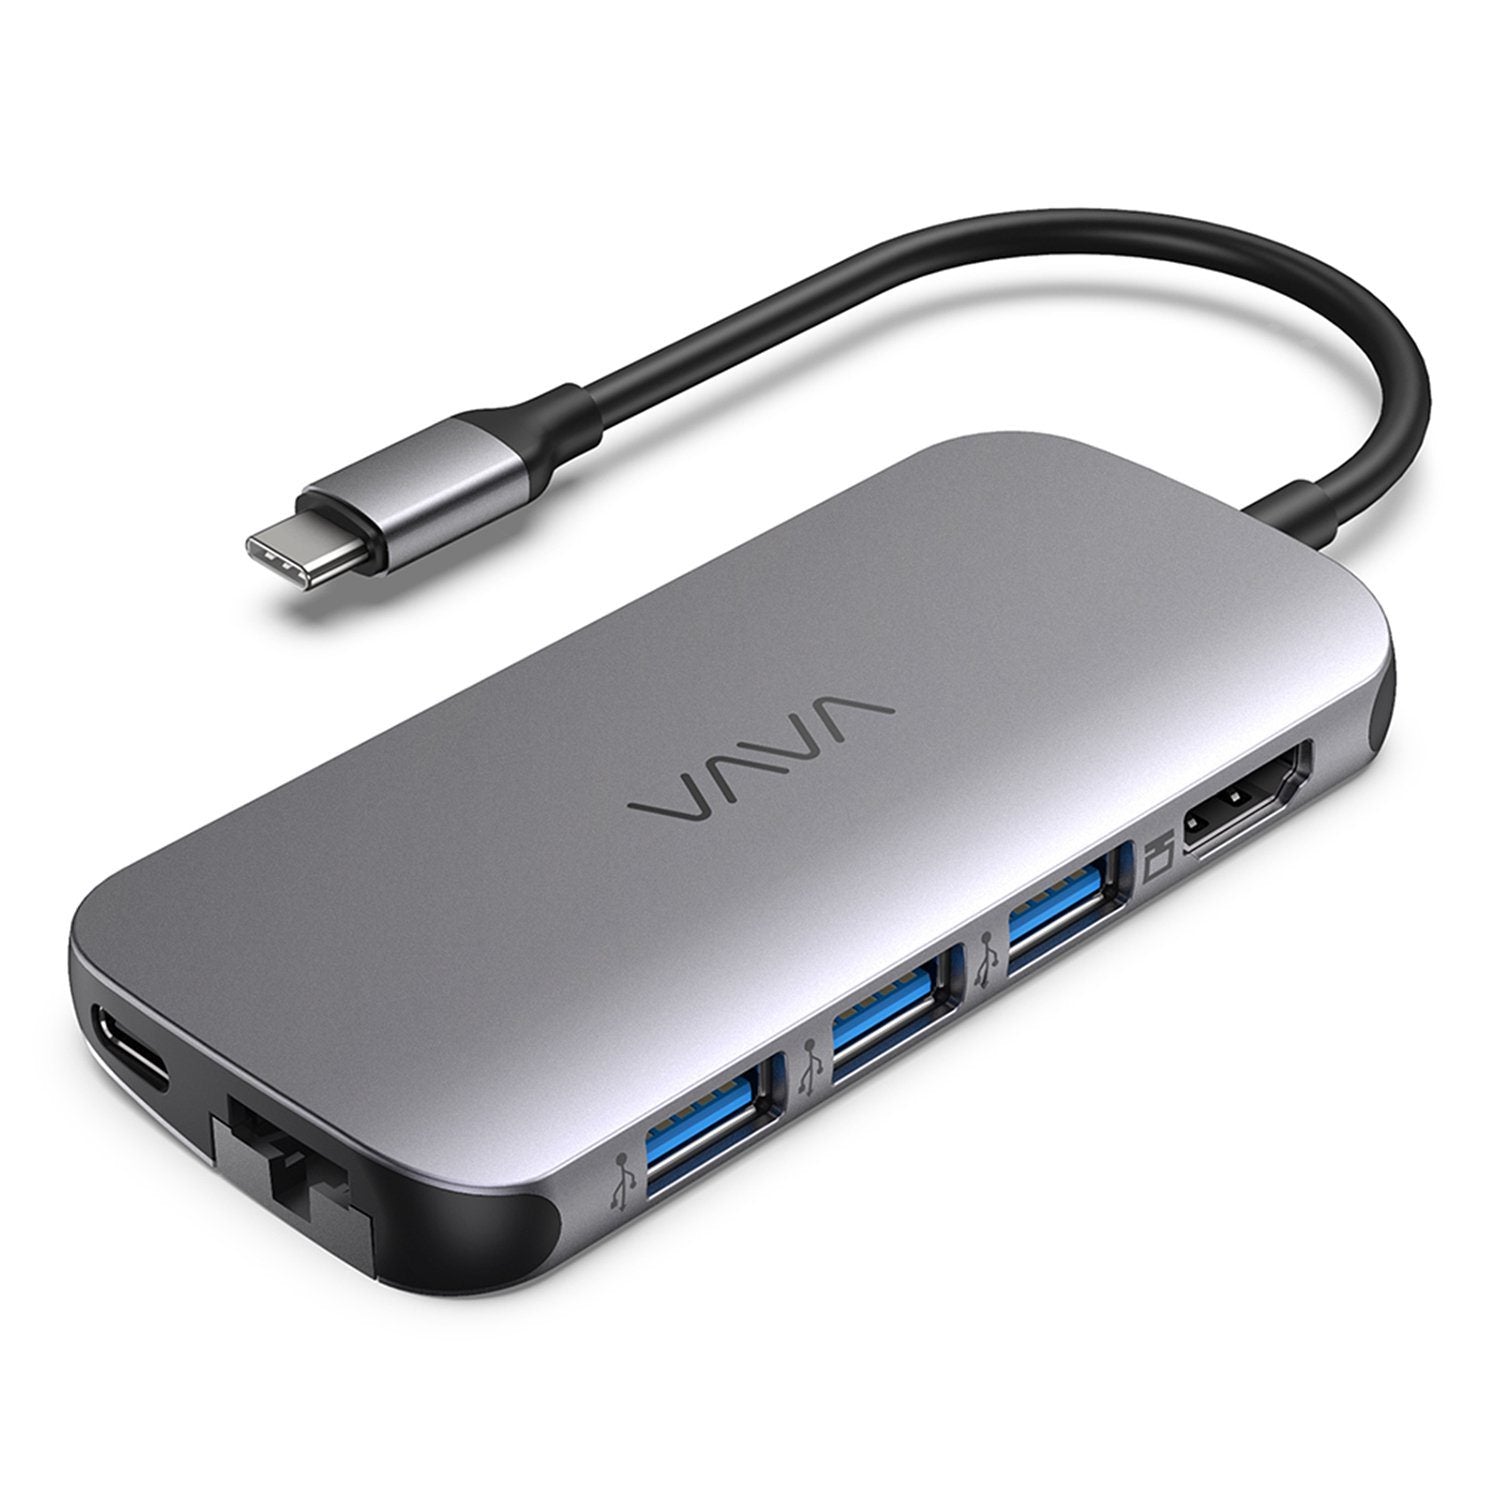 VAVA VA-UC006 8 in 1 USB C Hub Adapter with 4K HDMI, 1Gbps RJ45 Ethernet Port, USB 3.0, SD/TF Card Reader, Gray Default VAVA Default 